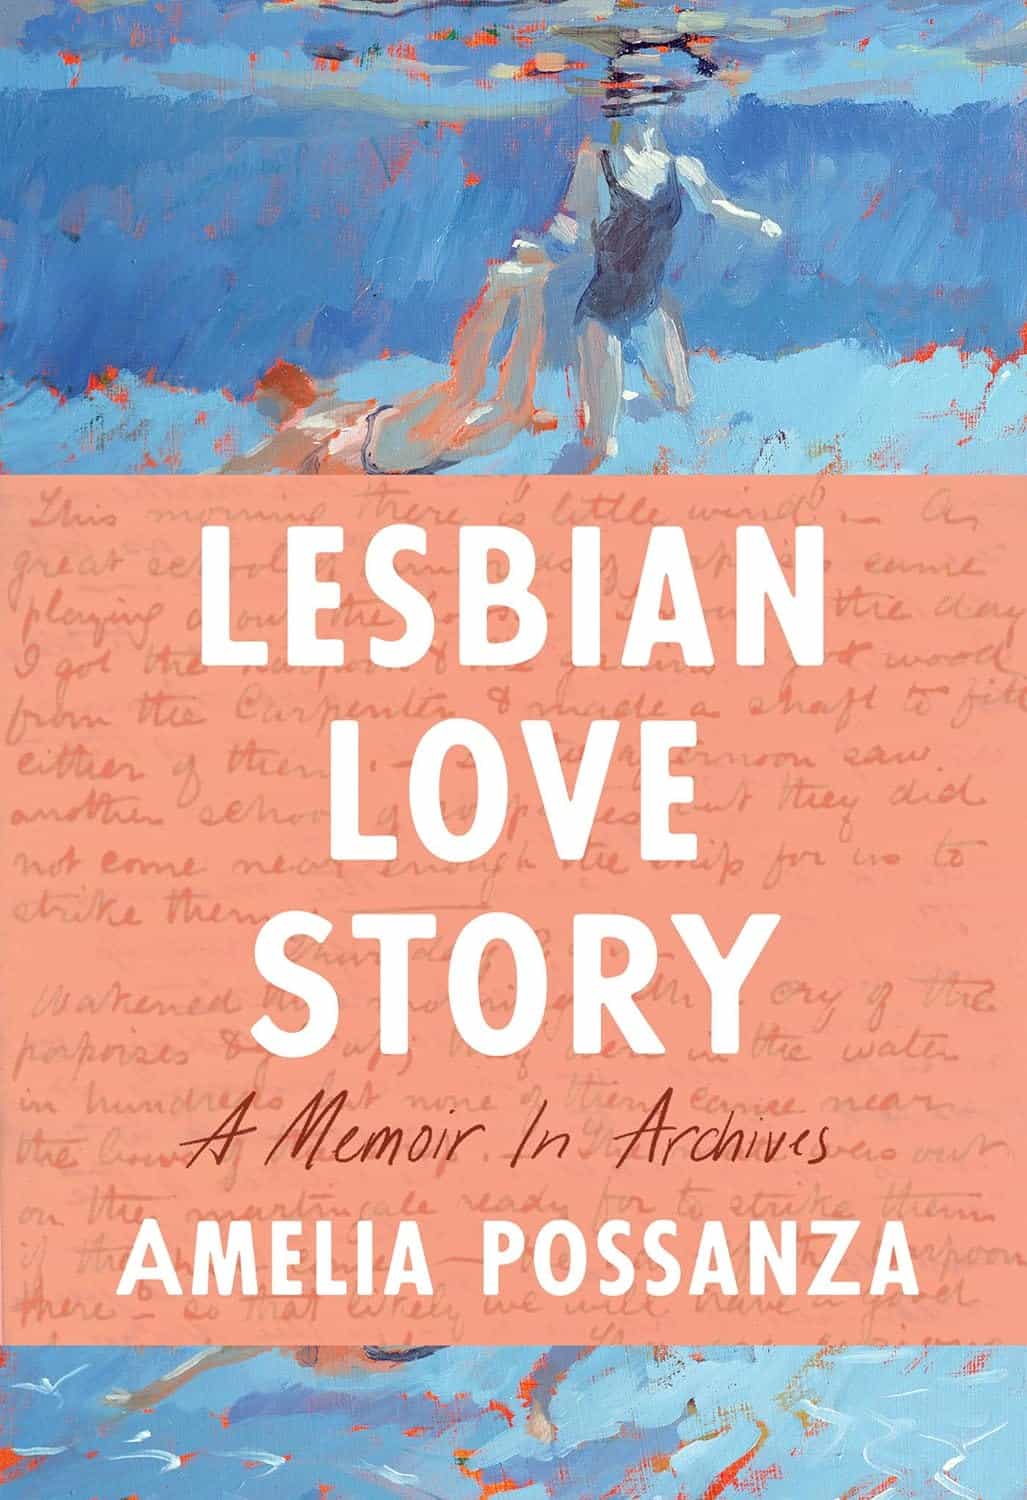 Lesbian Love Story, by Amelia Possanza